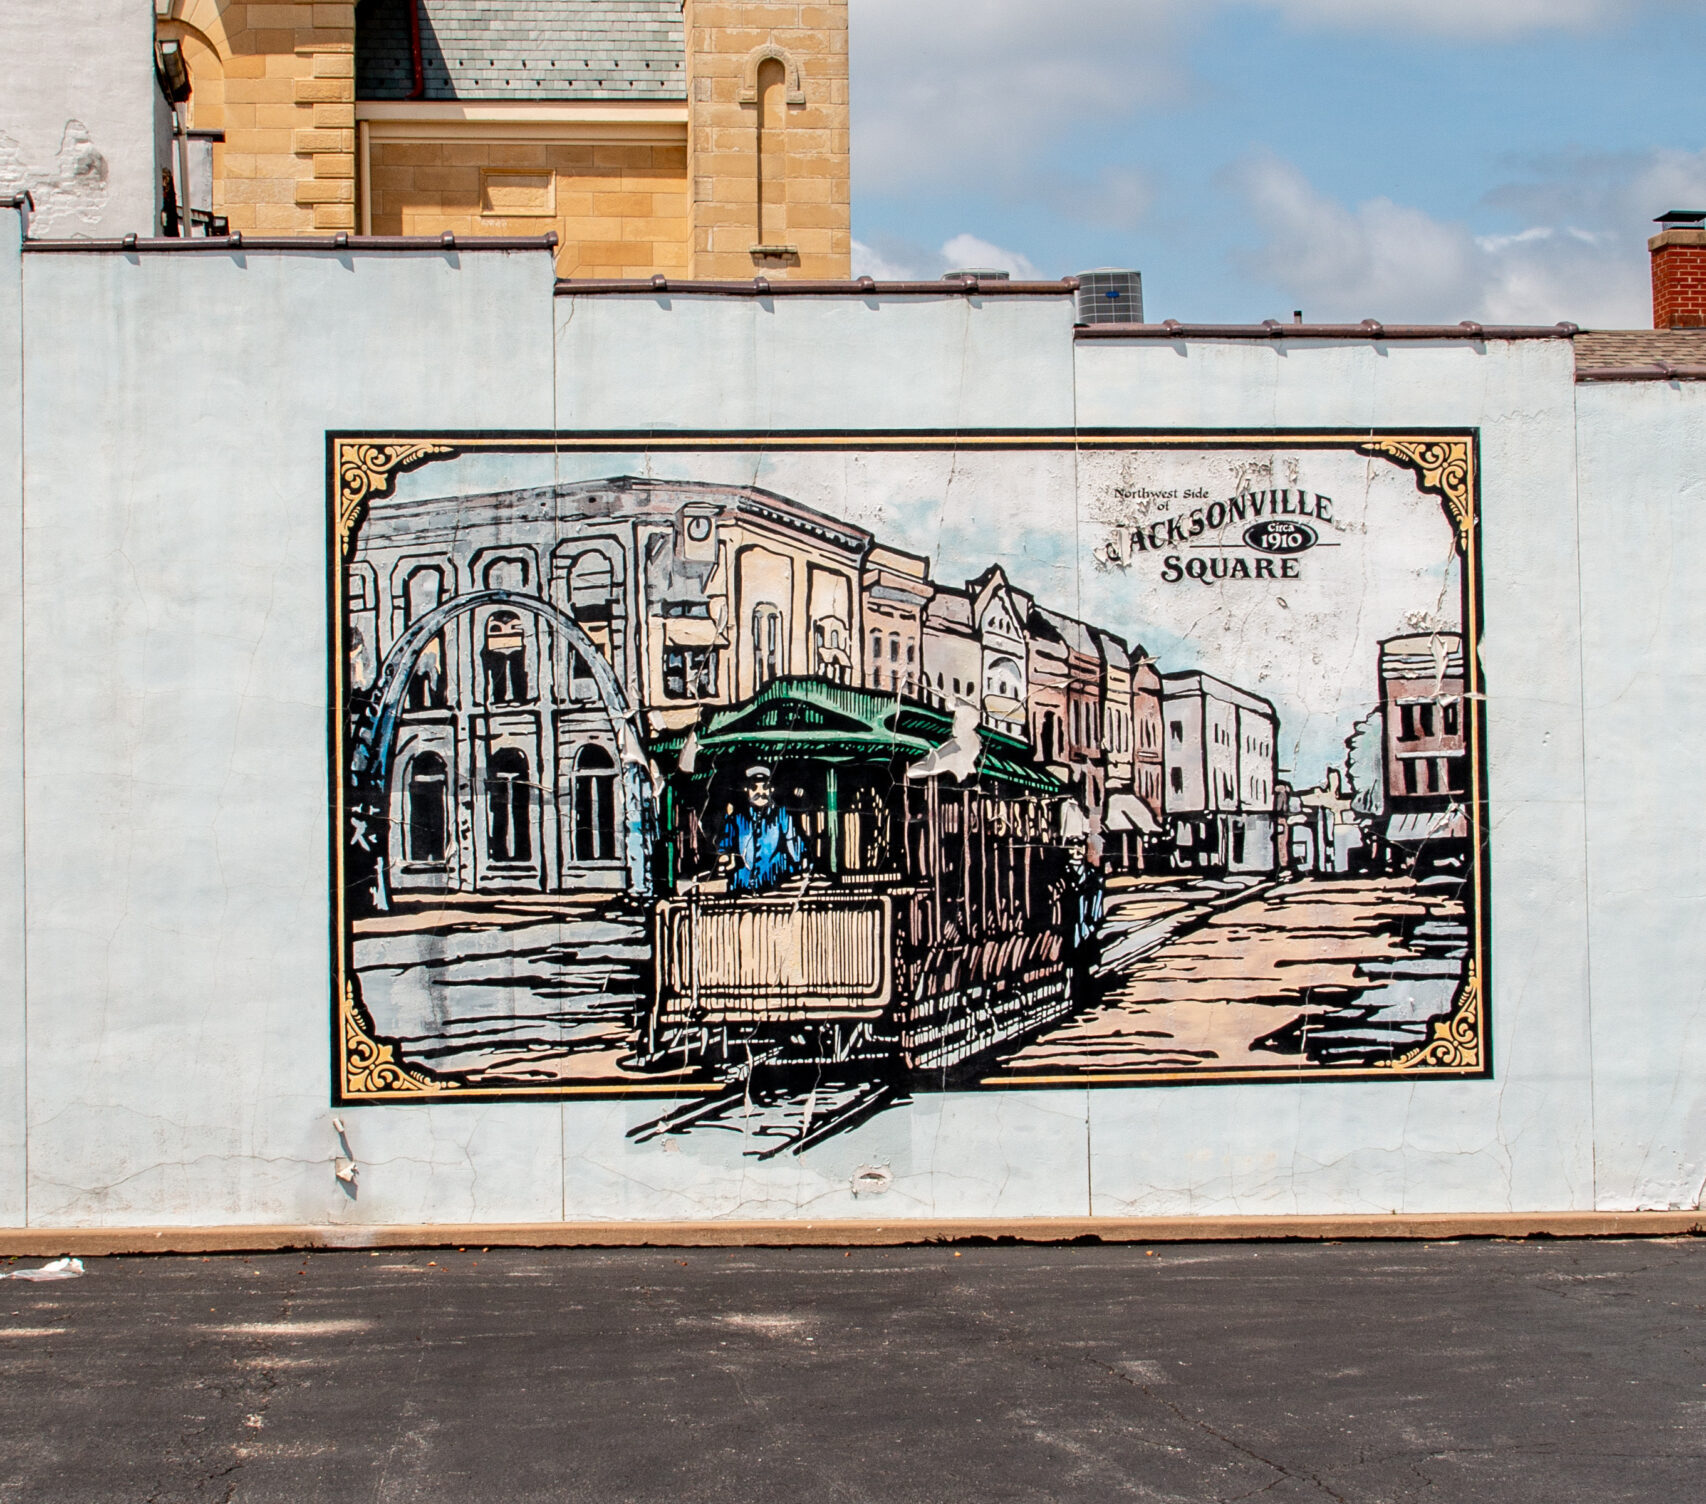 Walldog mural in Jacksonville, IL